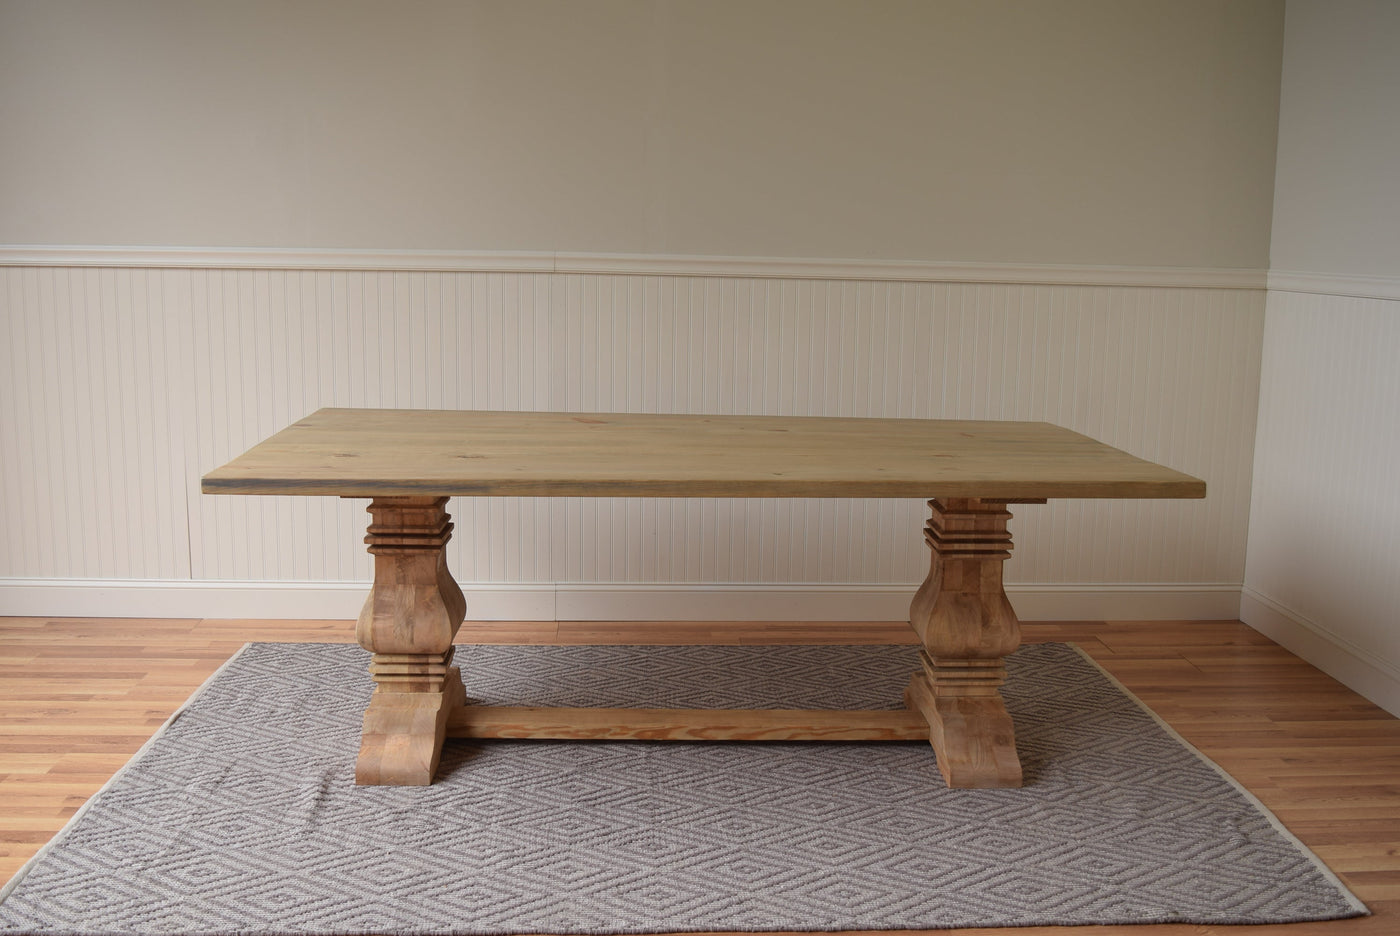 The Heirloom Pedestal Table